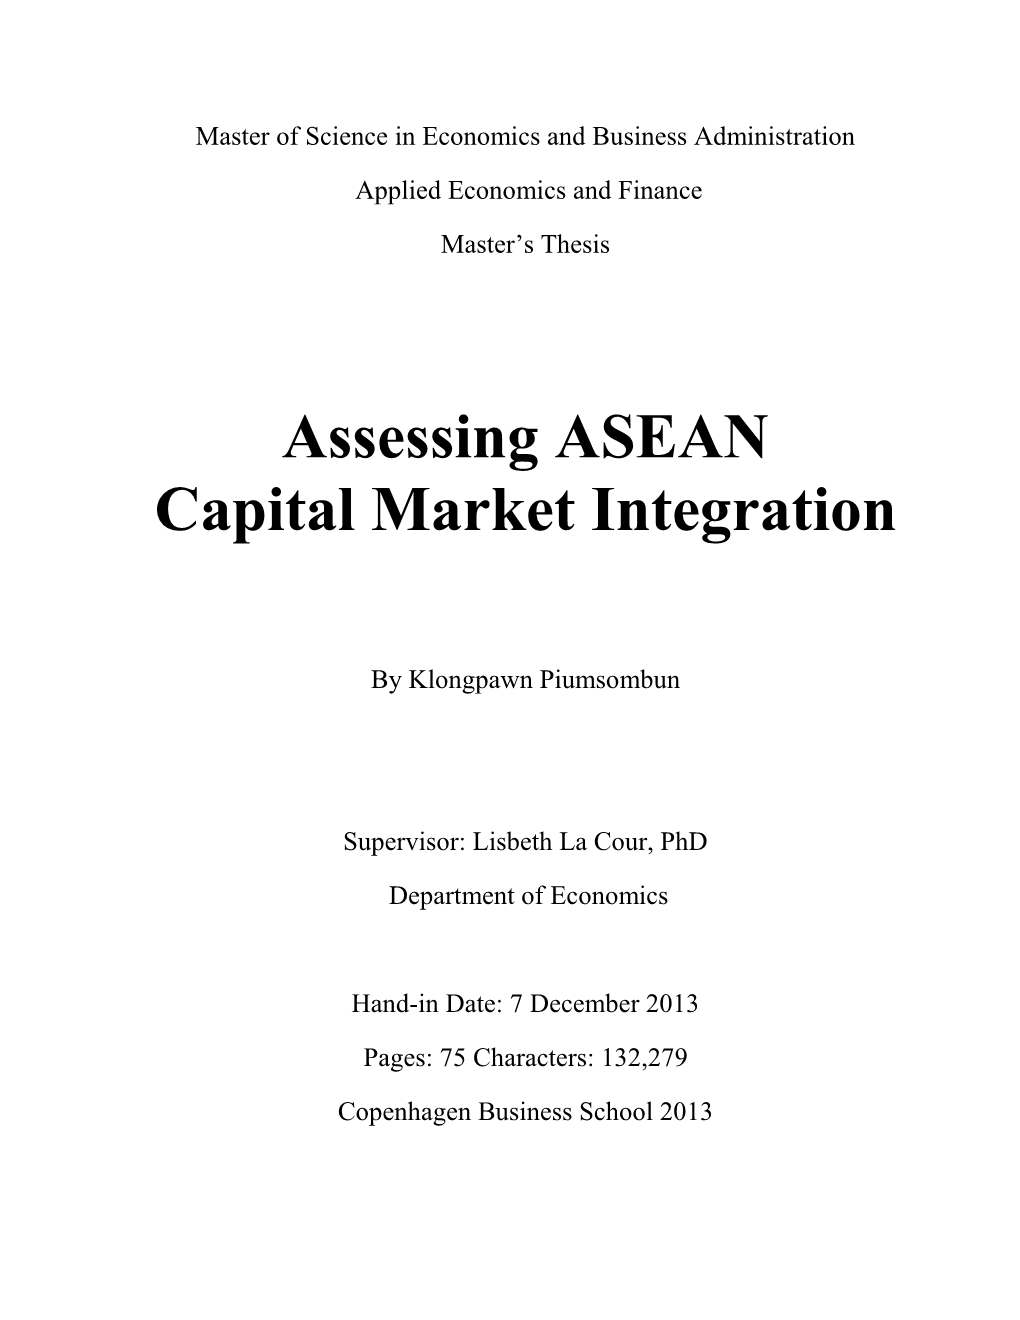 Assessing ASEAN Capital Market Integration